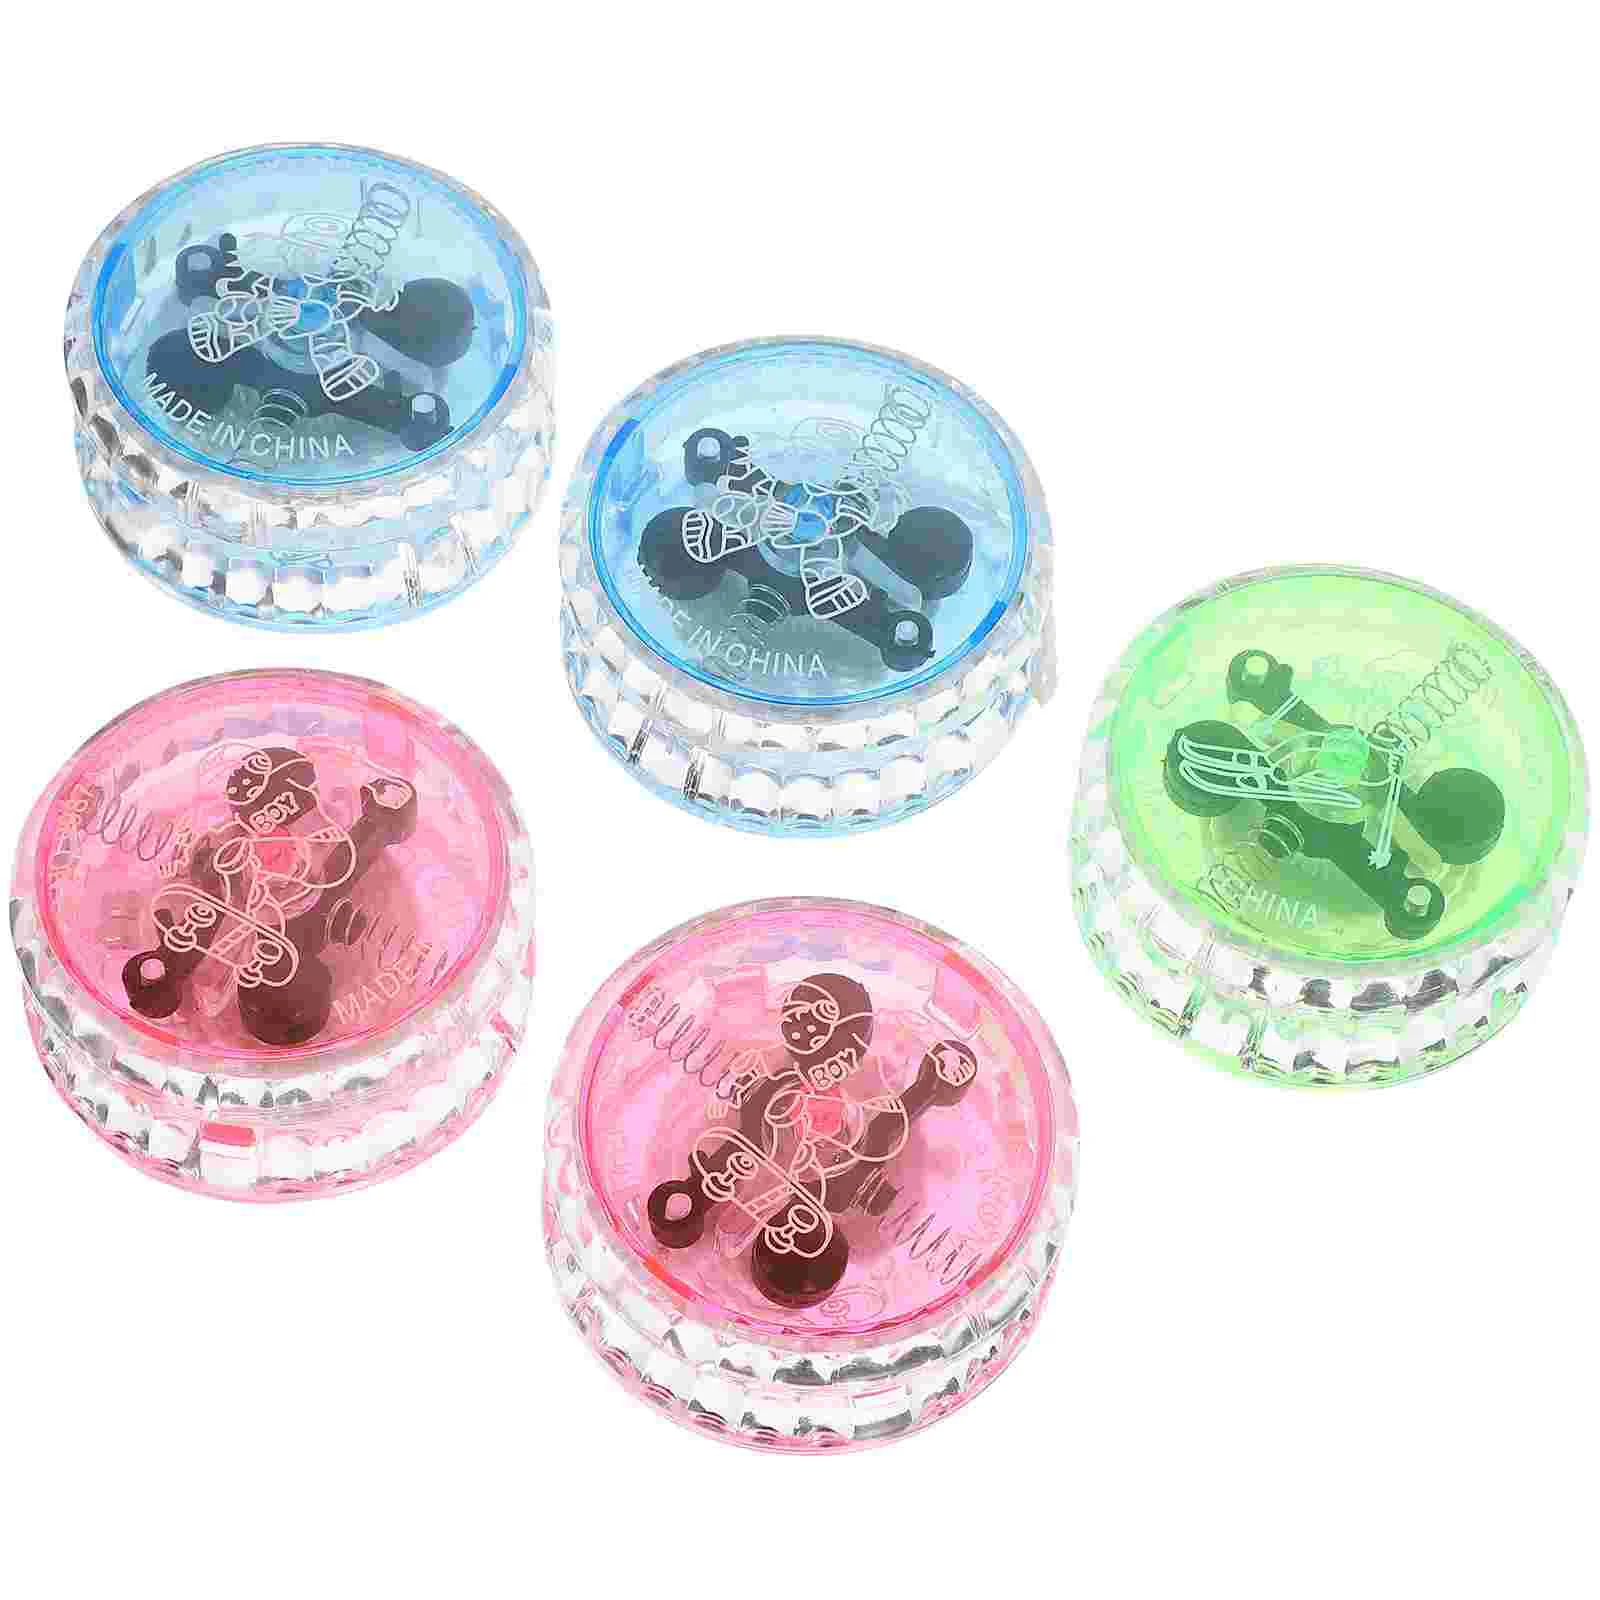 

5 Pcs Luminous Yo-yo Children’s Toys Responsive Ball Flashing Yoyo Gift Boy Beginners Creative Plastic Kids